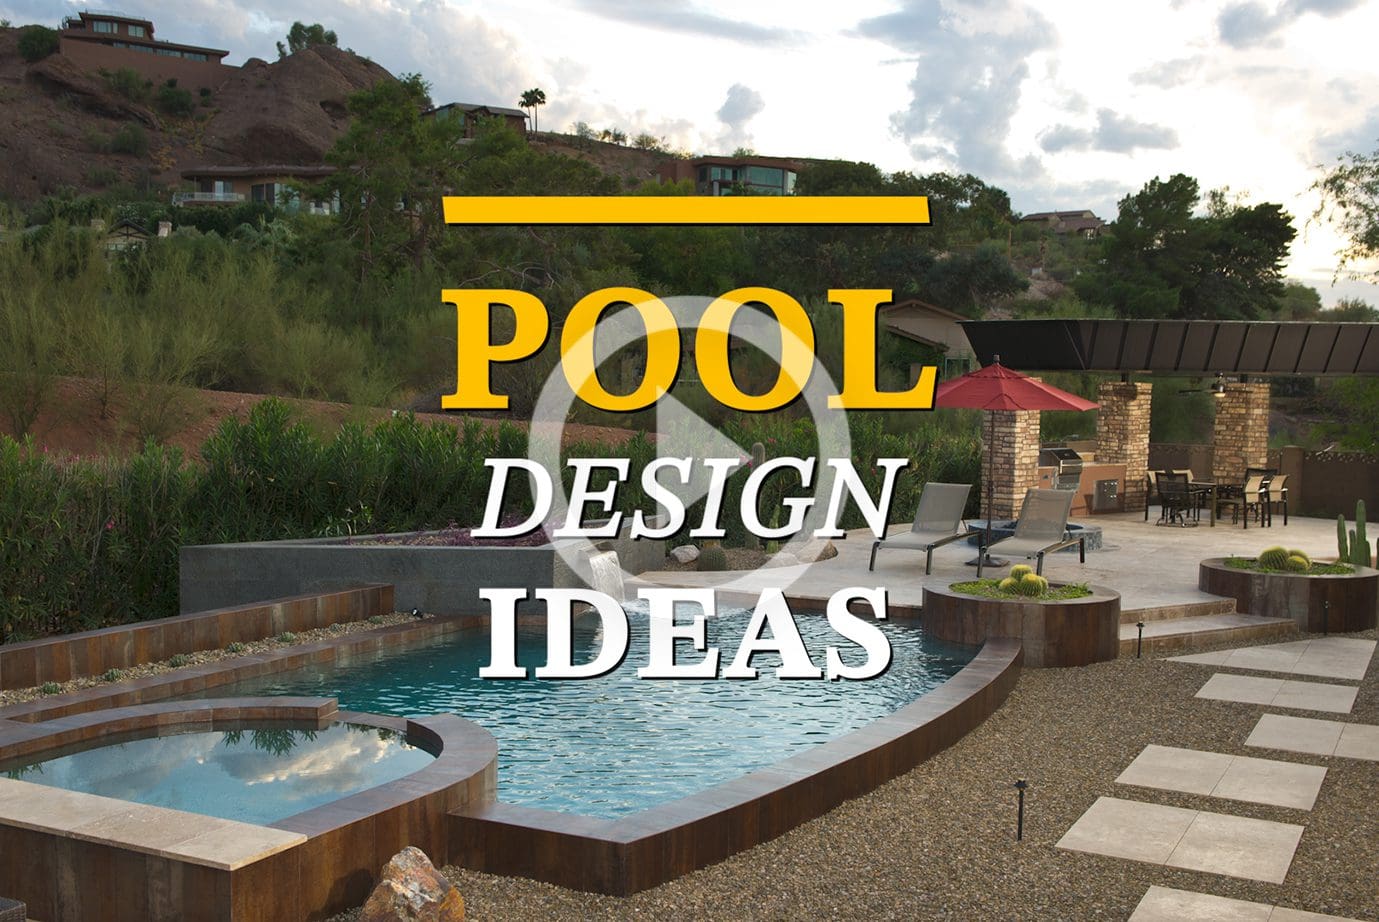 Pool Design Ideas: Camelback, Concrete & Copper